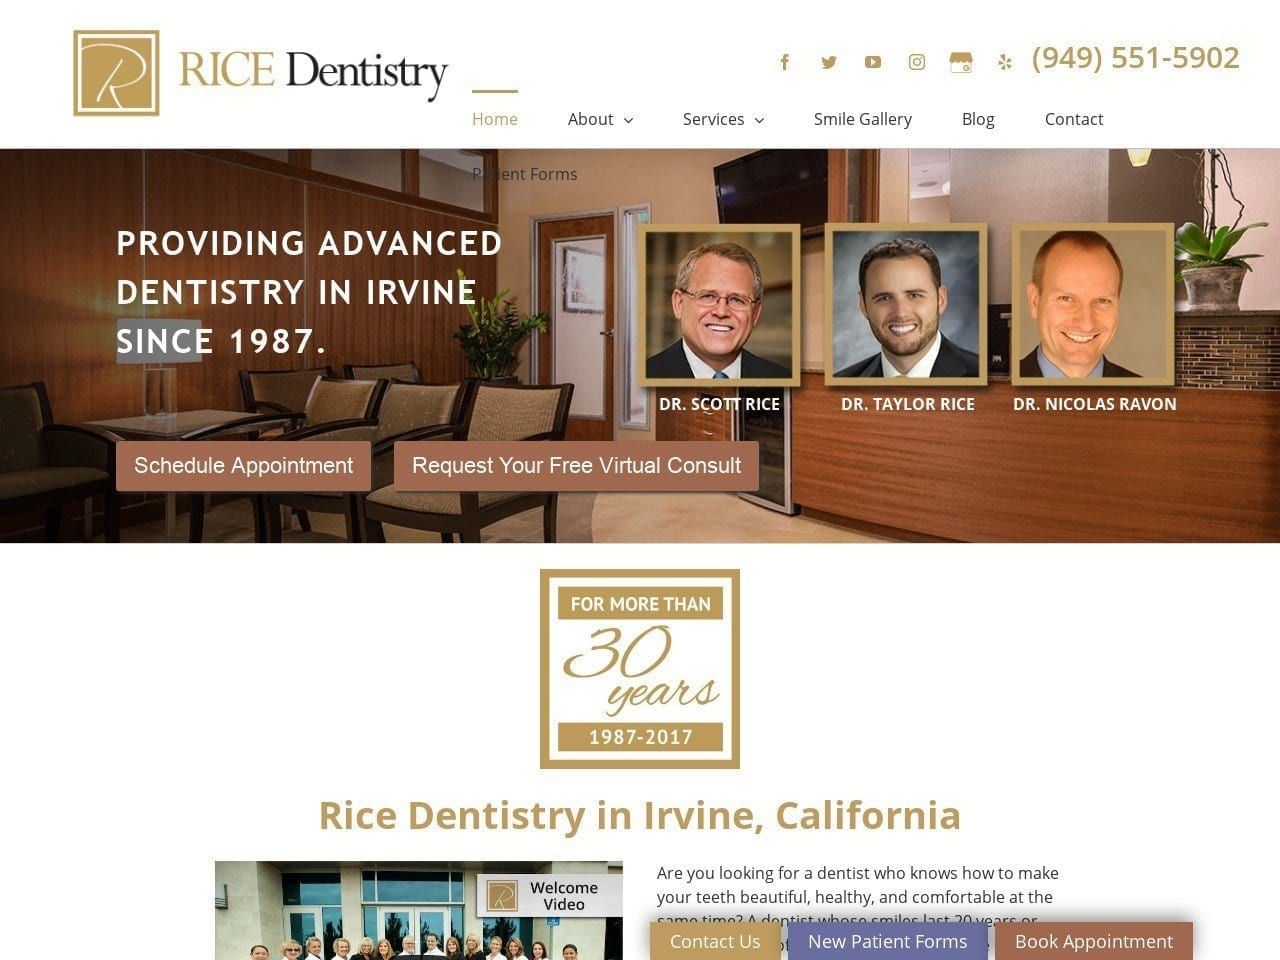 Rice Dentistry Website Screenshot from irvinedentalcare.com